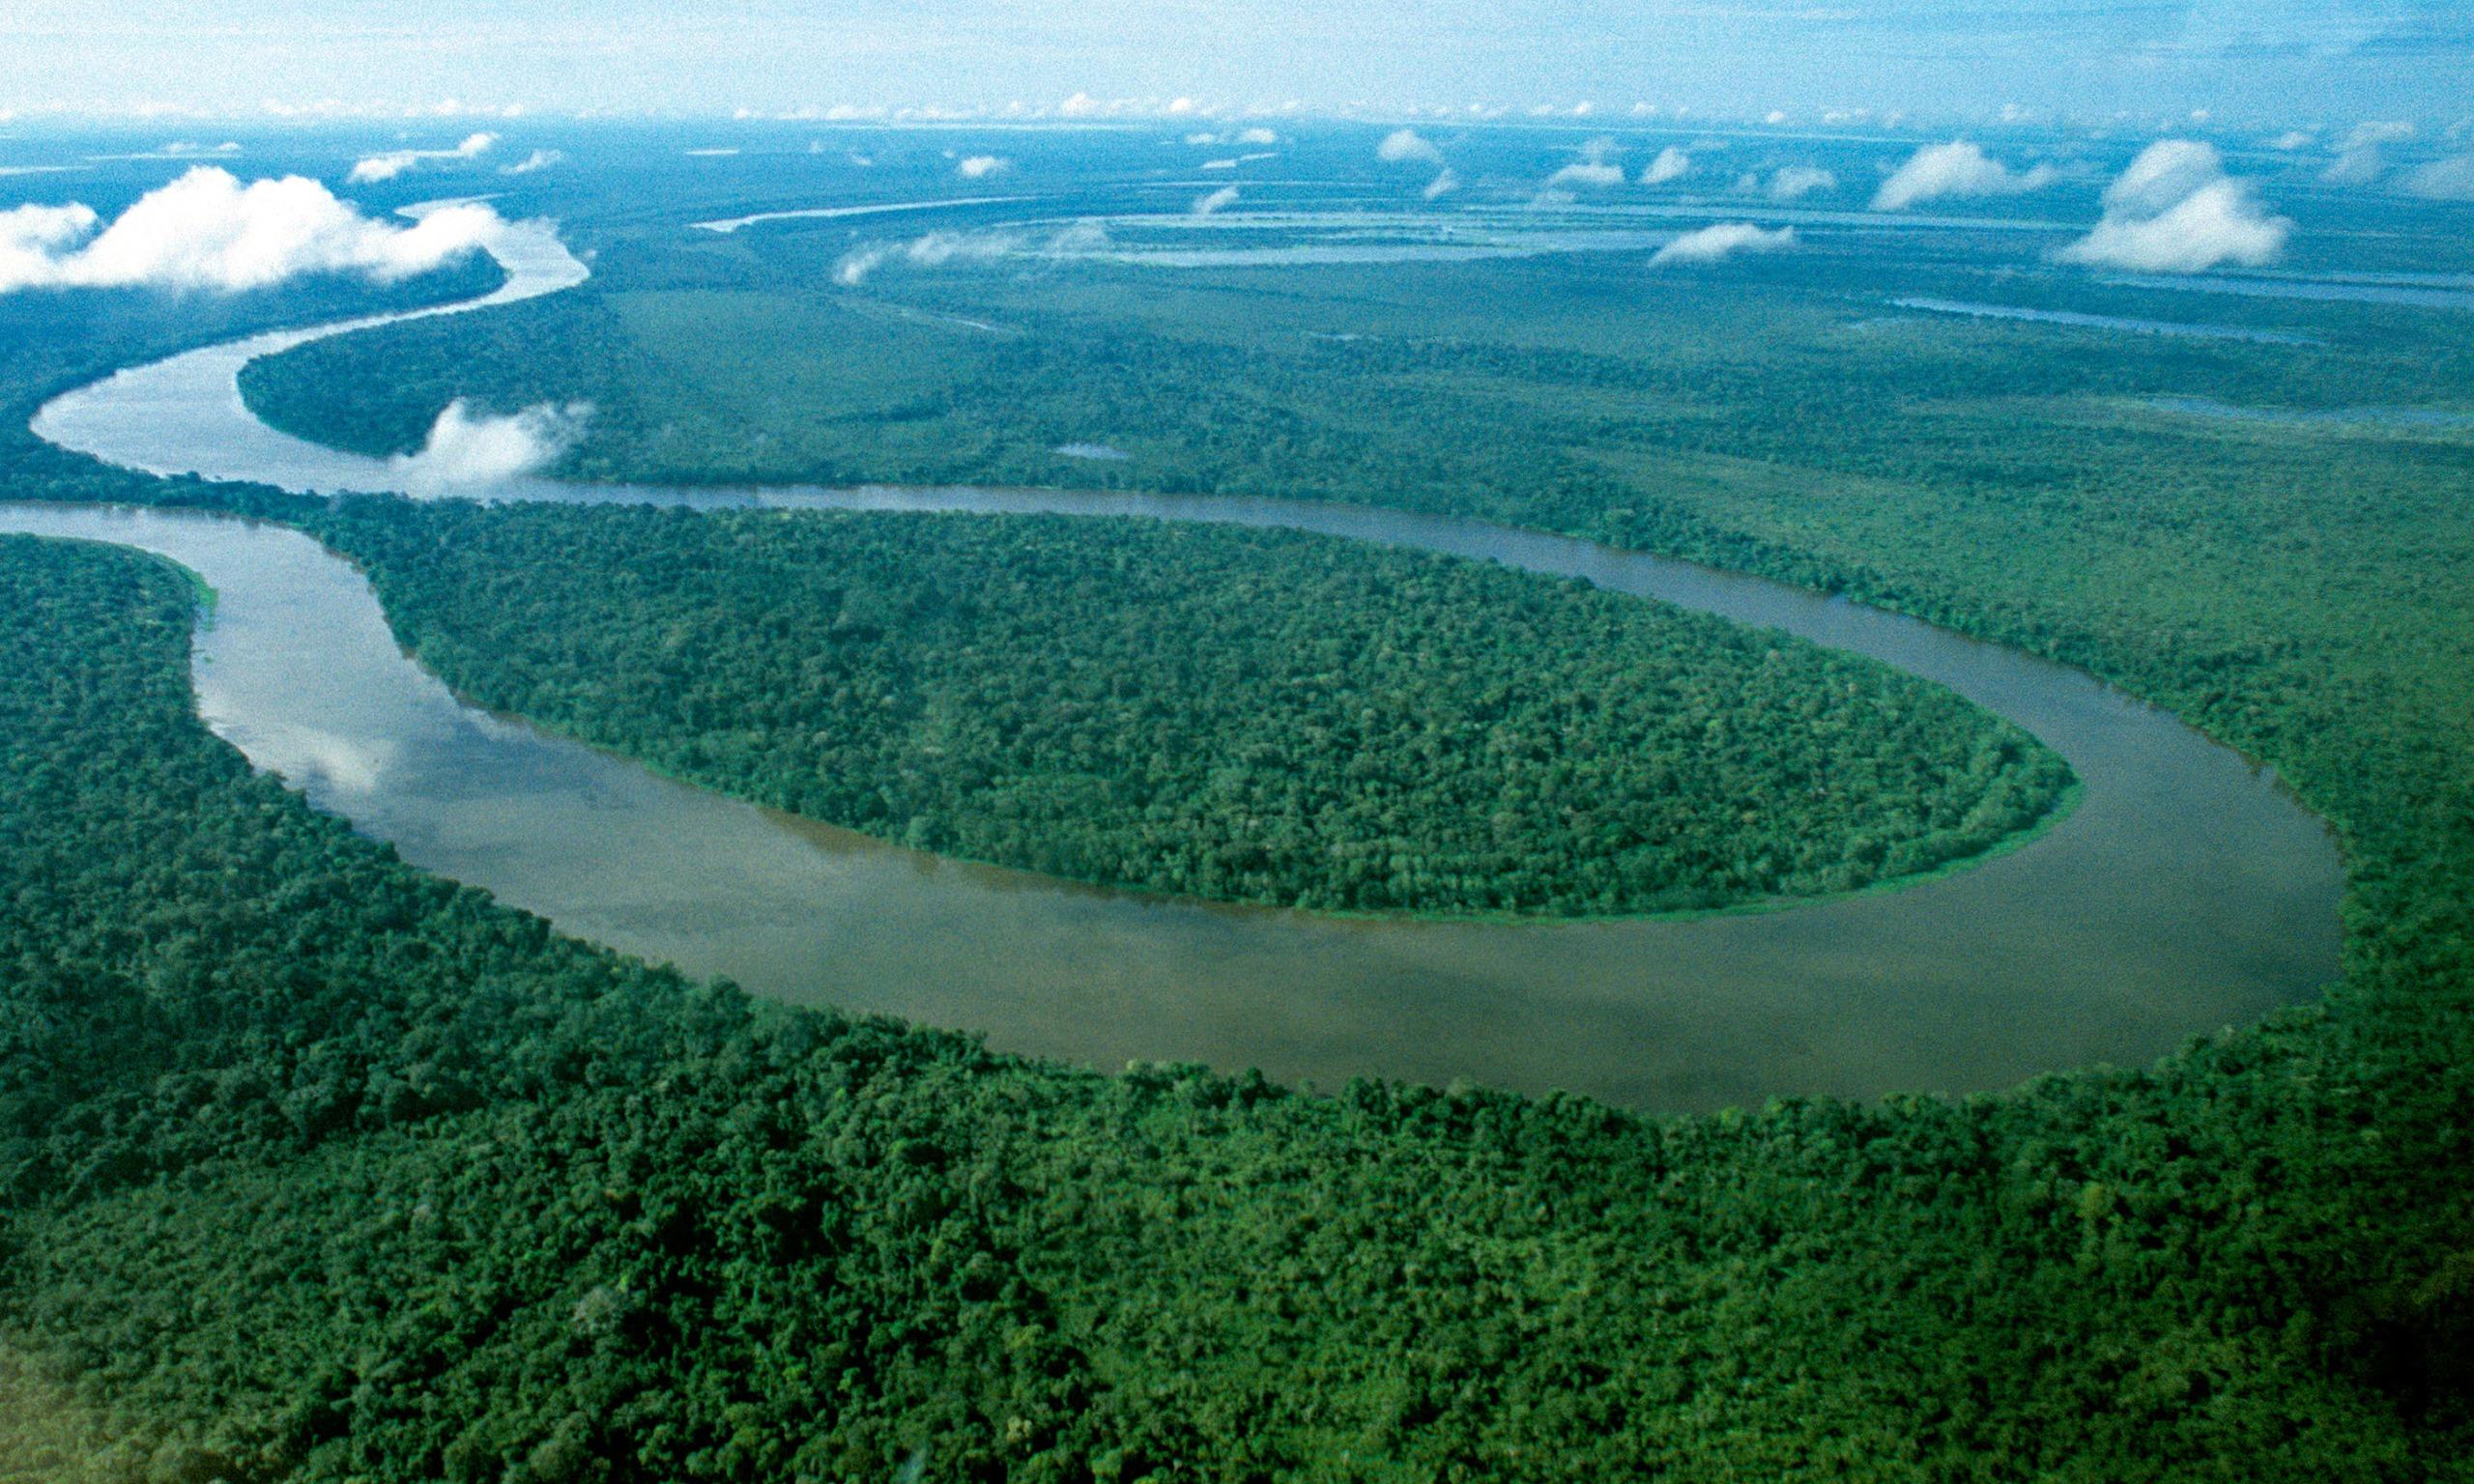 tiva do brasil拉丁美洲最大国家,有广袤的亚马逊雨林金砖国家之一